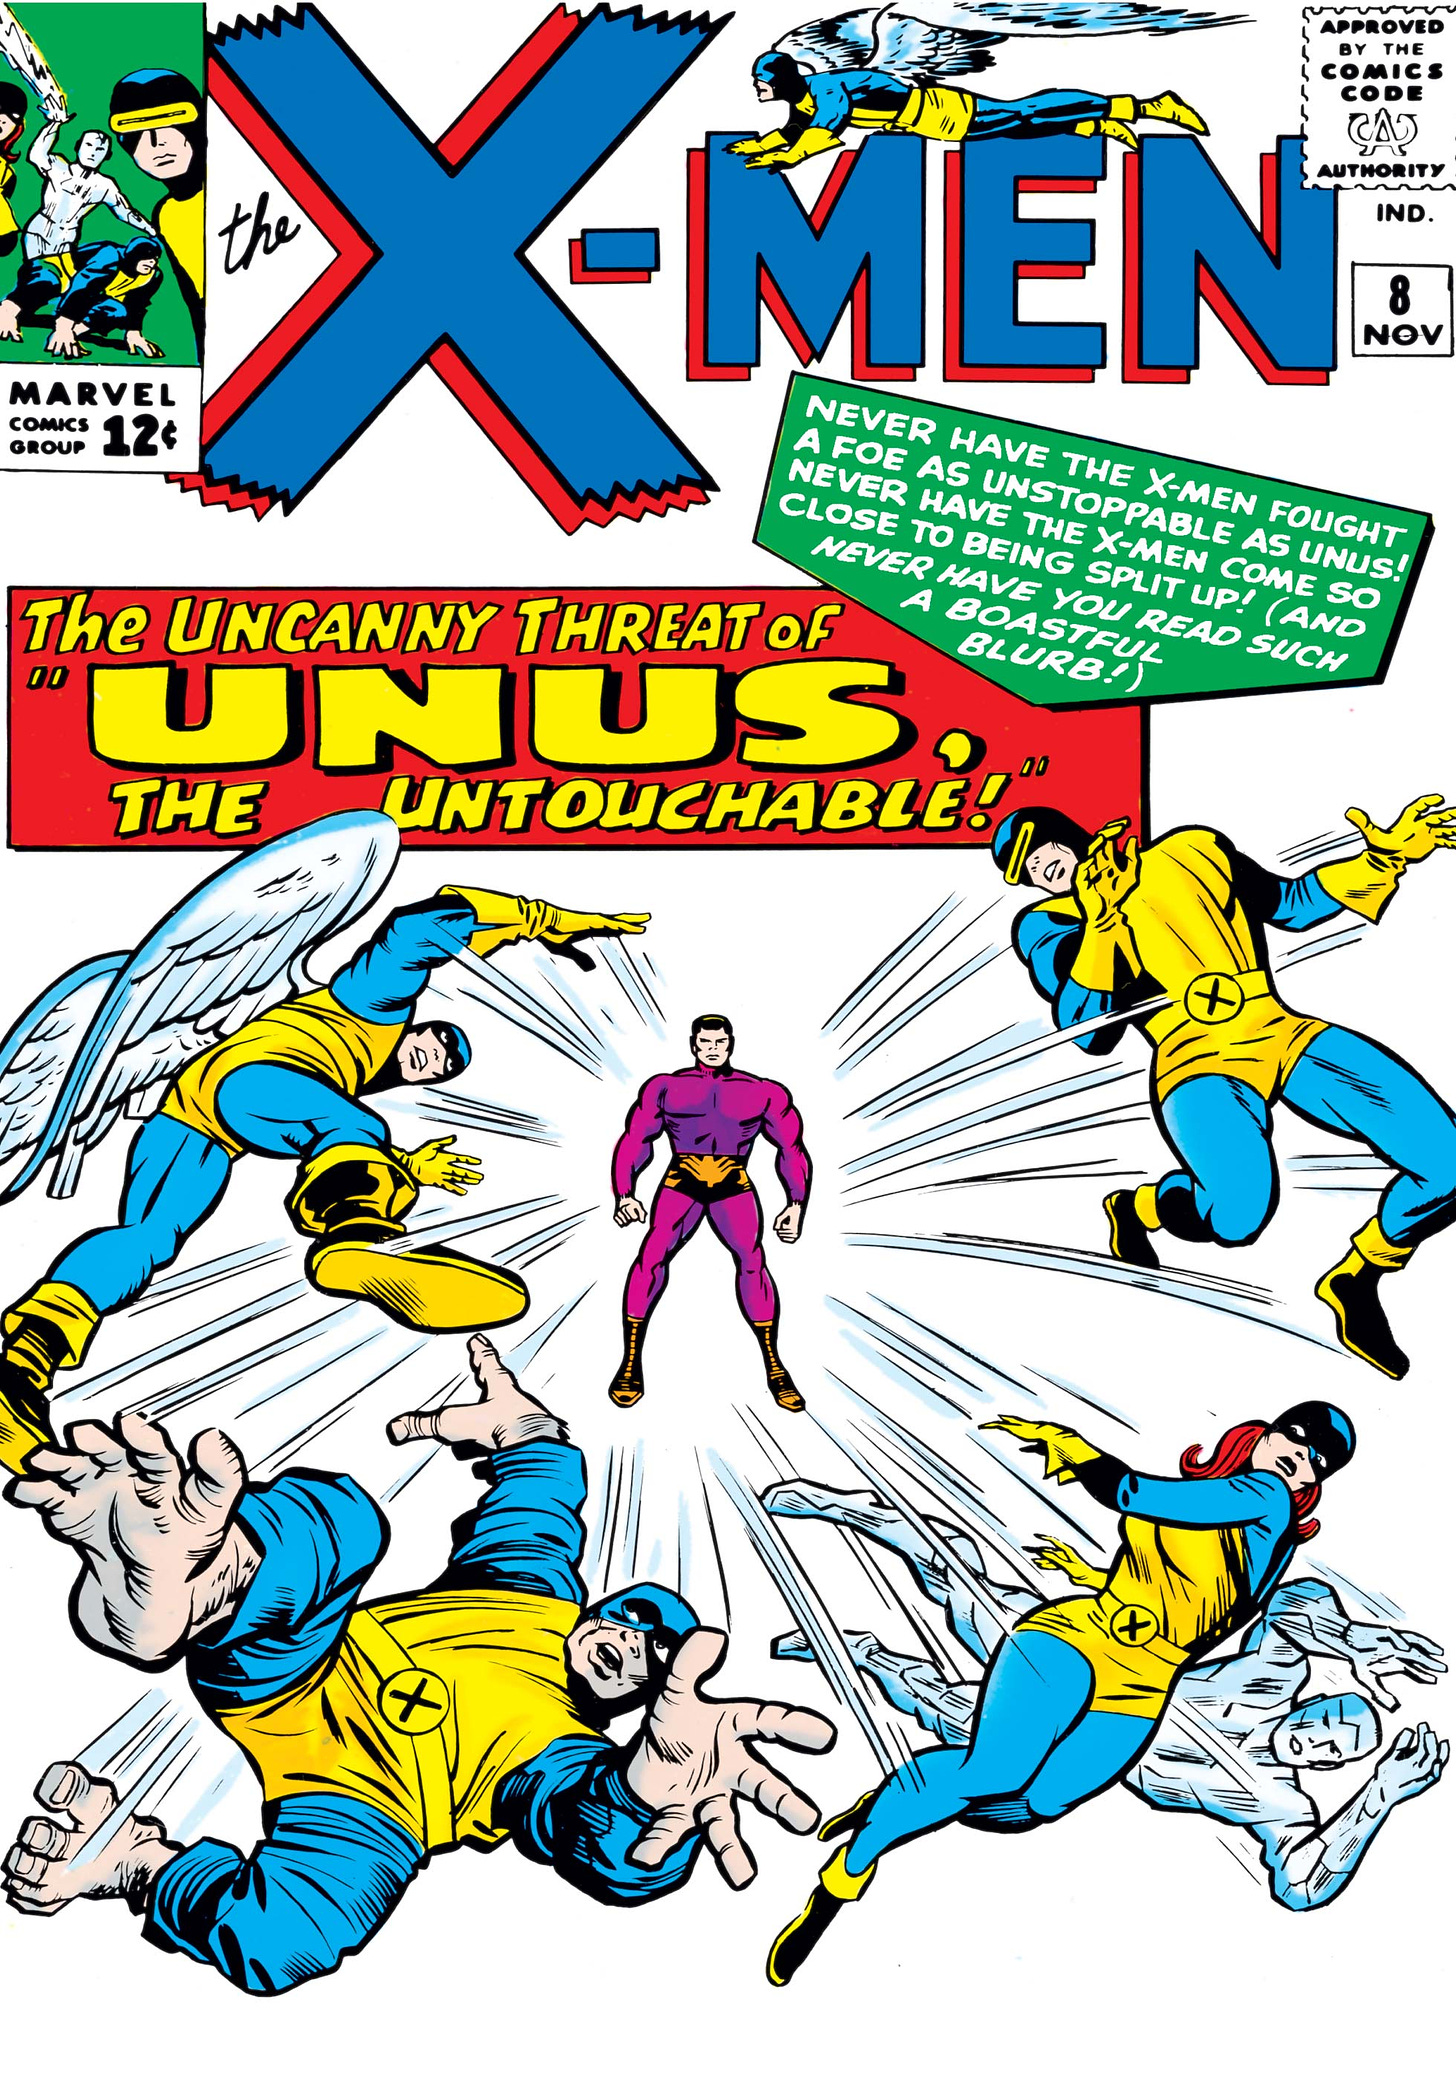 Uncanny X-Men (1963) #8 | Comic Issues | Marvel